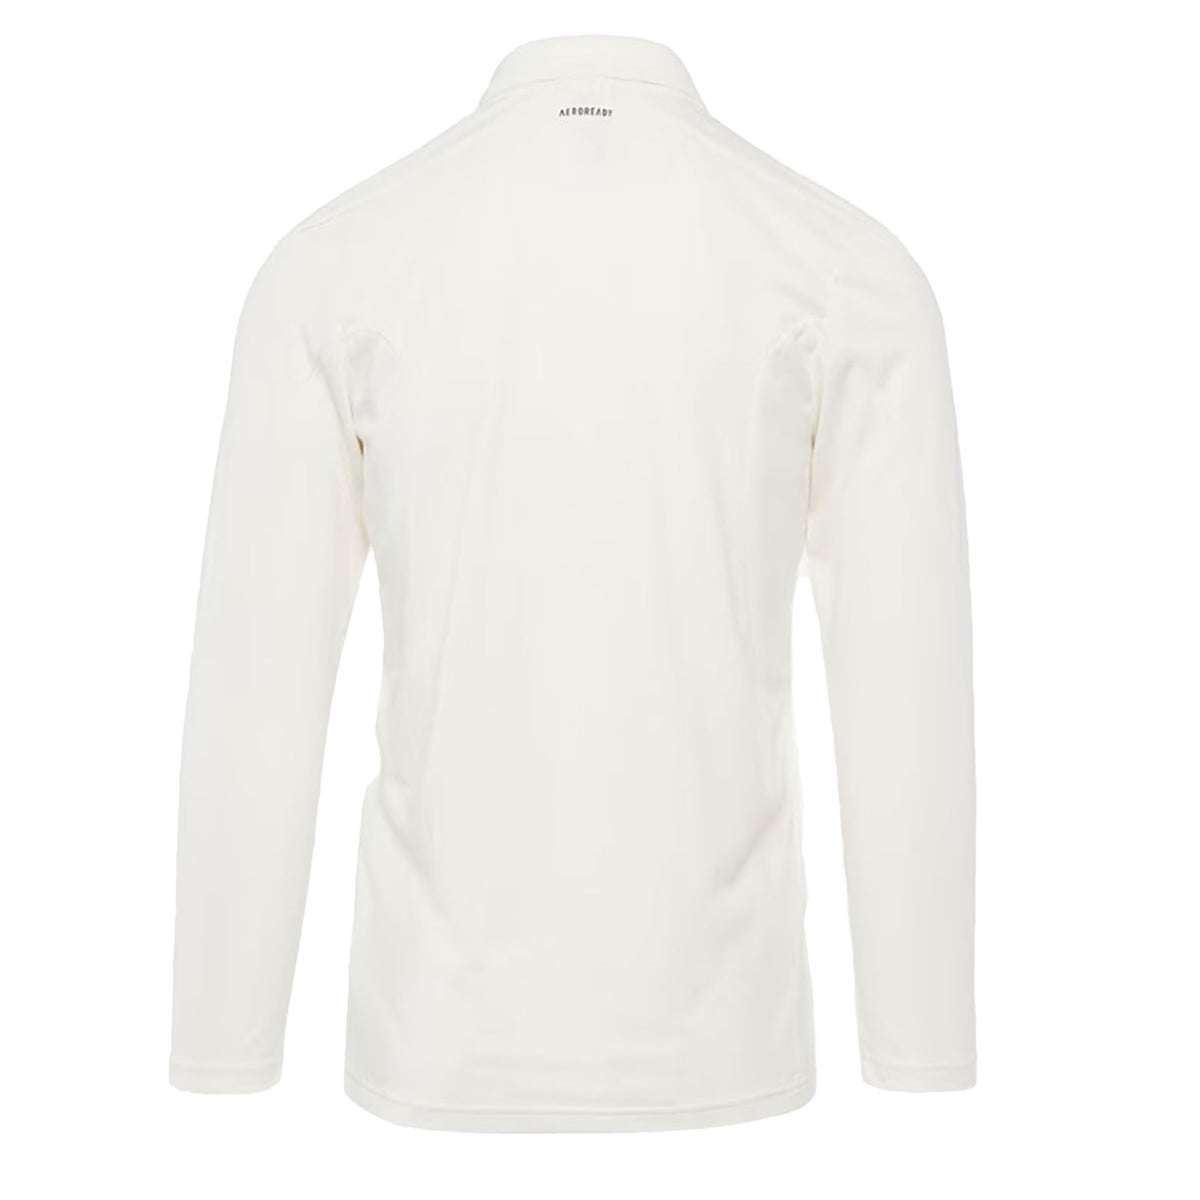 Wooburn Narkovians CC Adidas Long Sleeve Playing Shirt